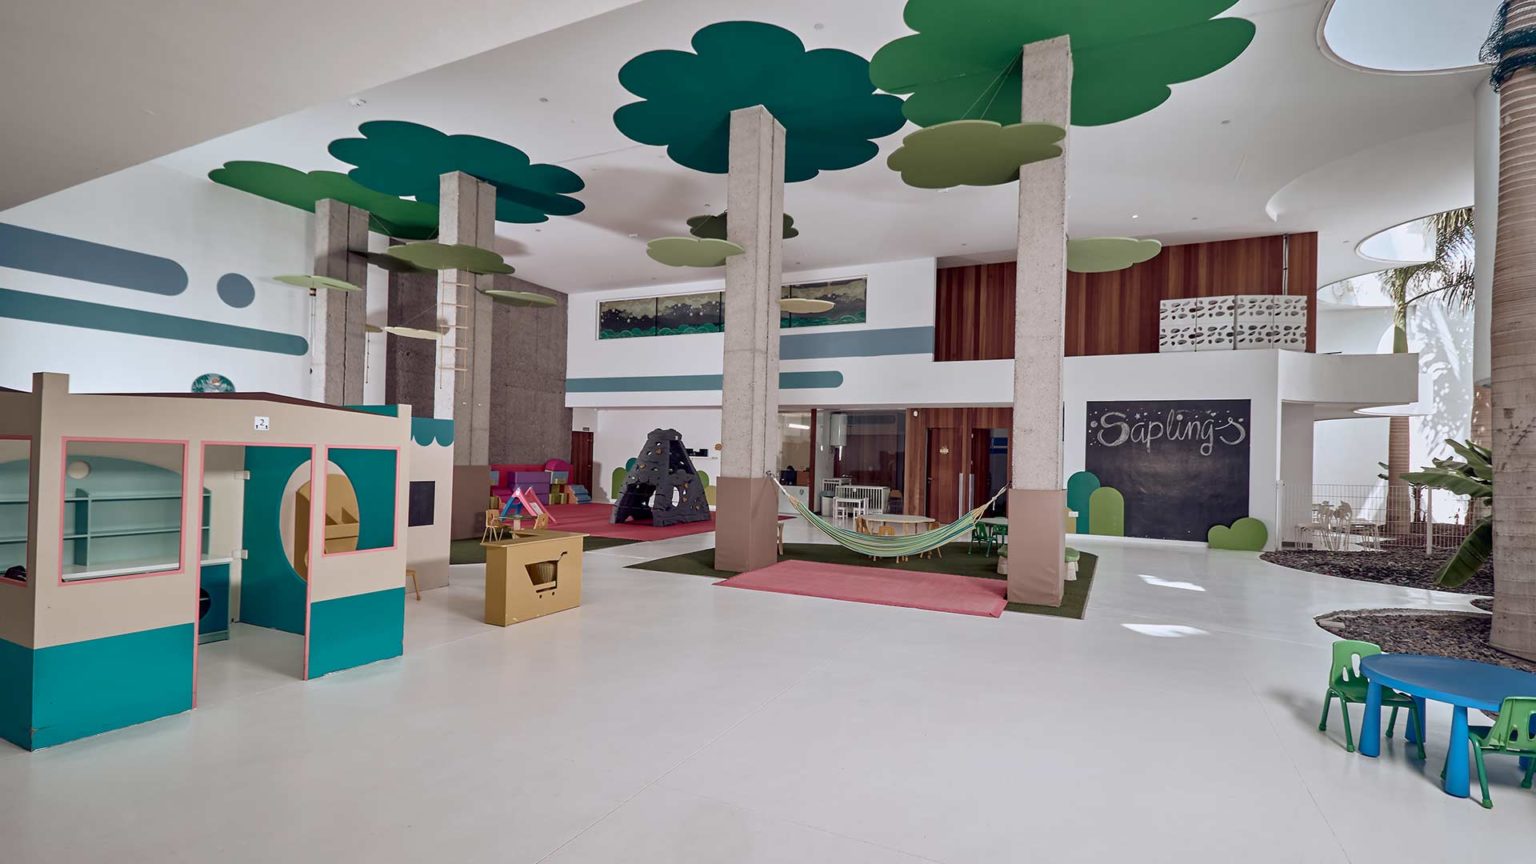 Indoor play area of the Baobab Suites Kids Club